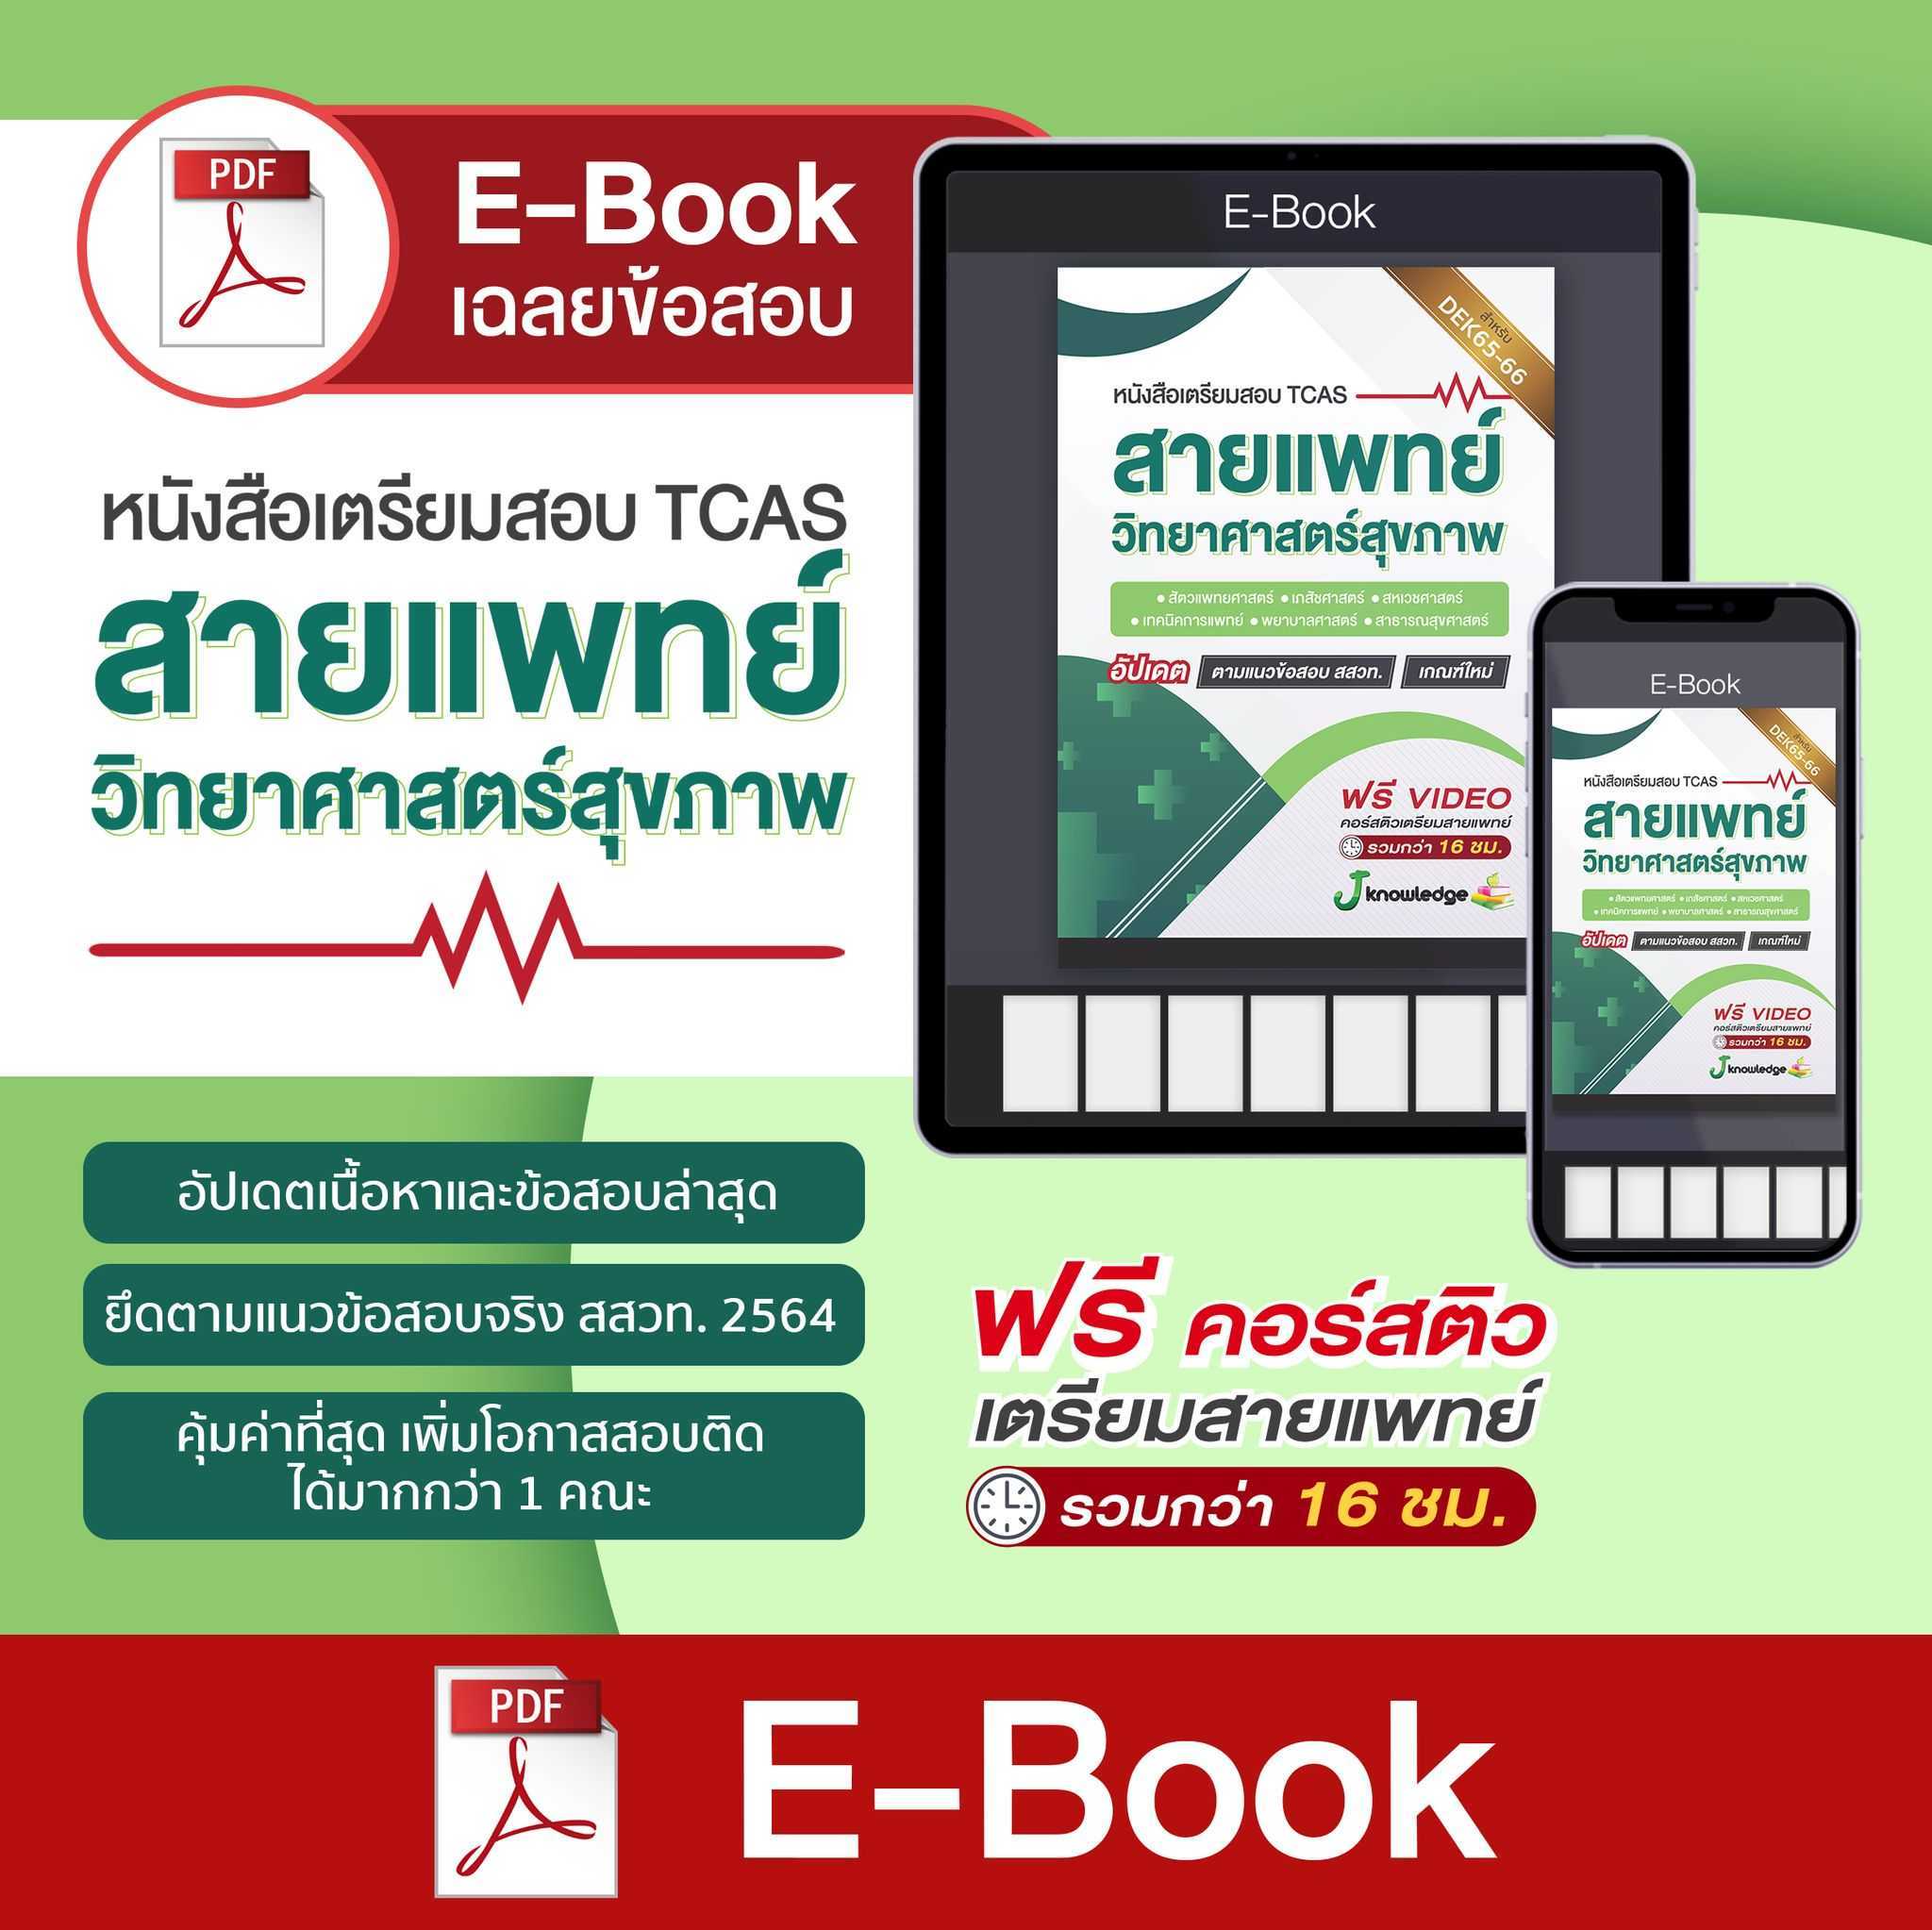 Lazada Thailand - E-Book Preparation for Medical Examination health sciences The latest criteria according to IPST. TCAS66